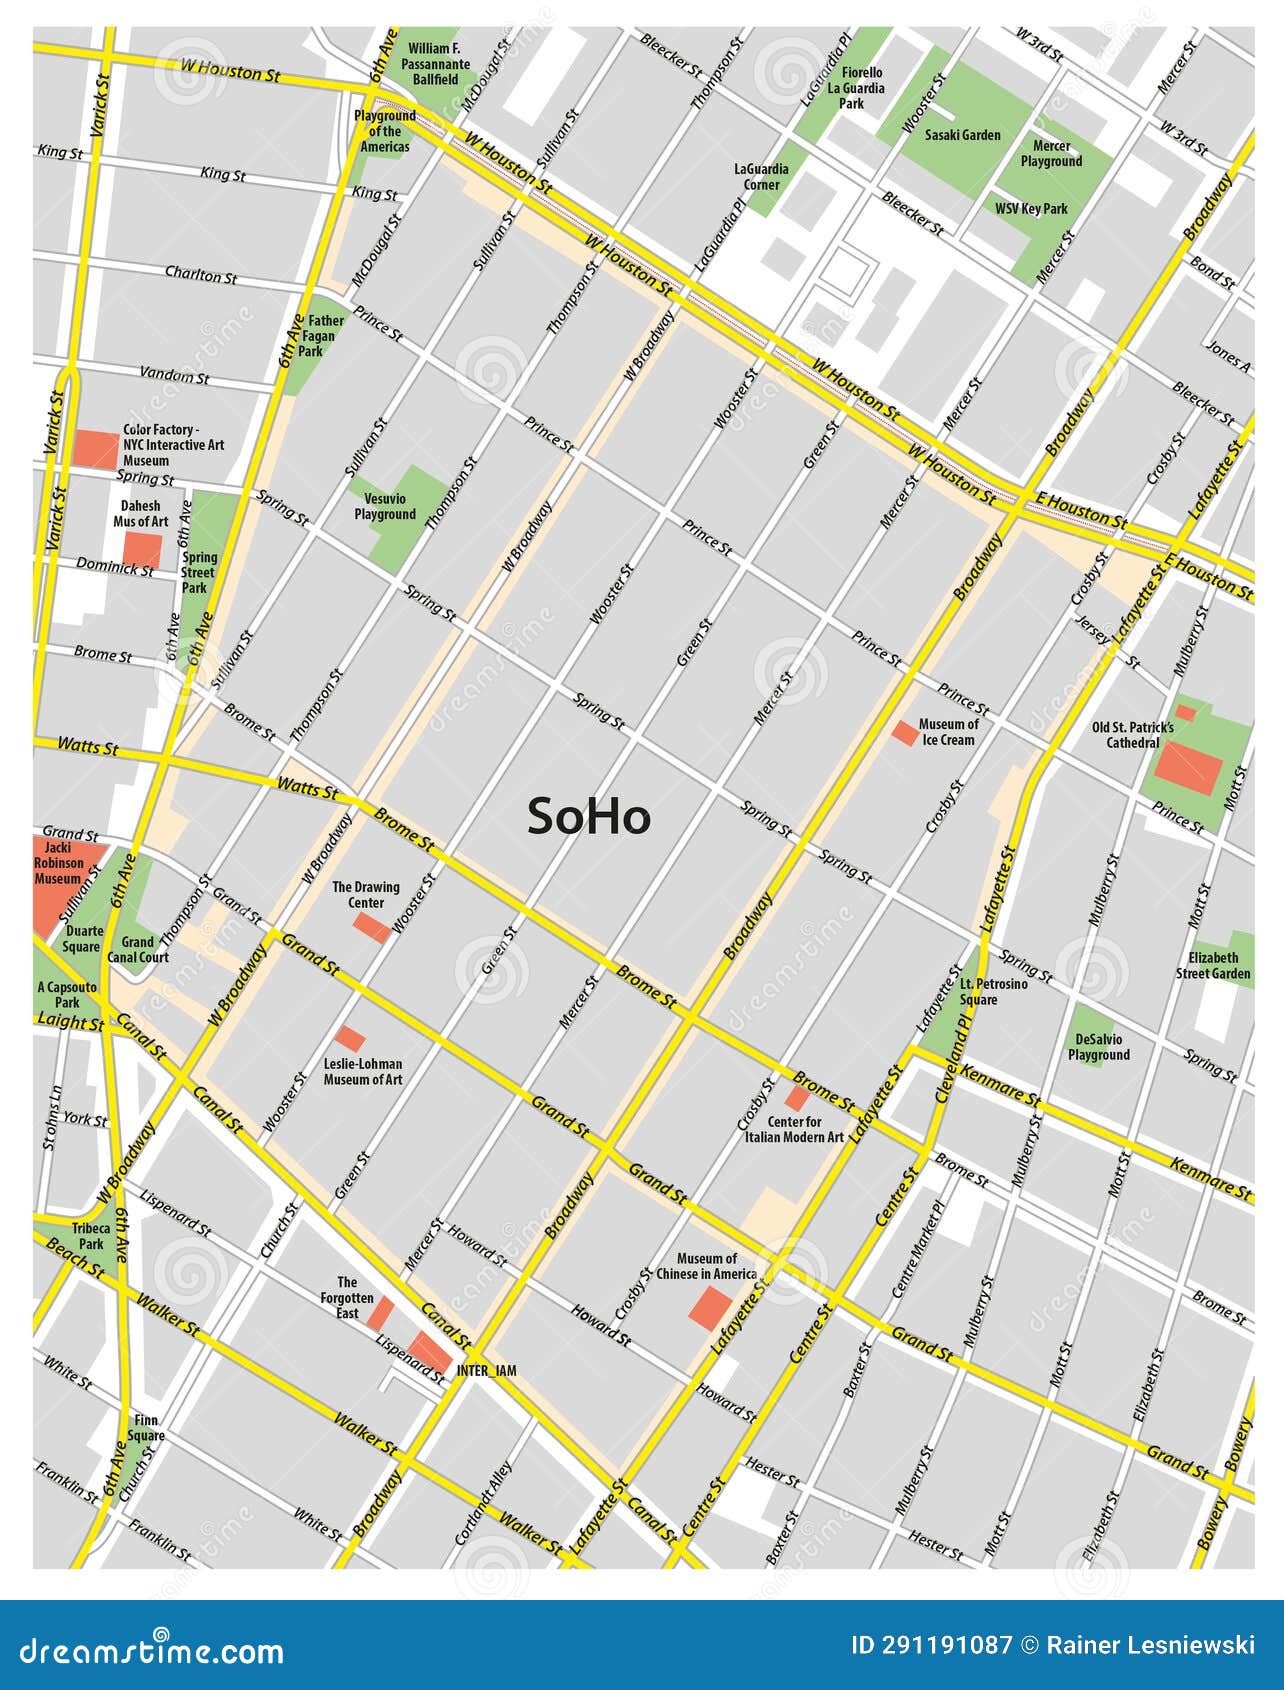 street map of the new york neighborhood soho, lower manhattan, new york city